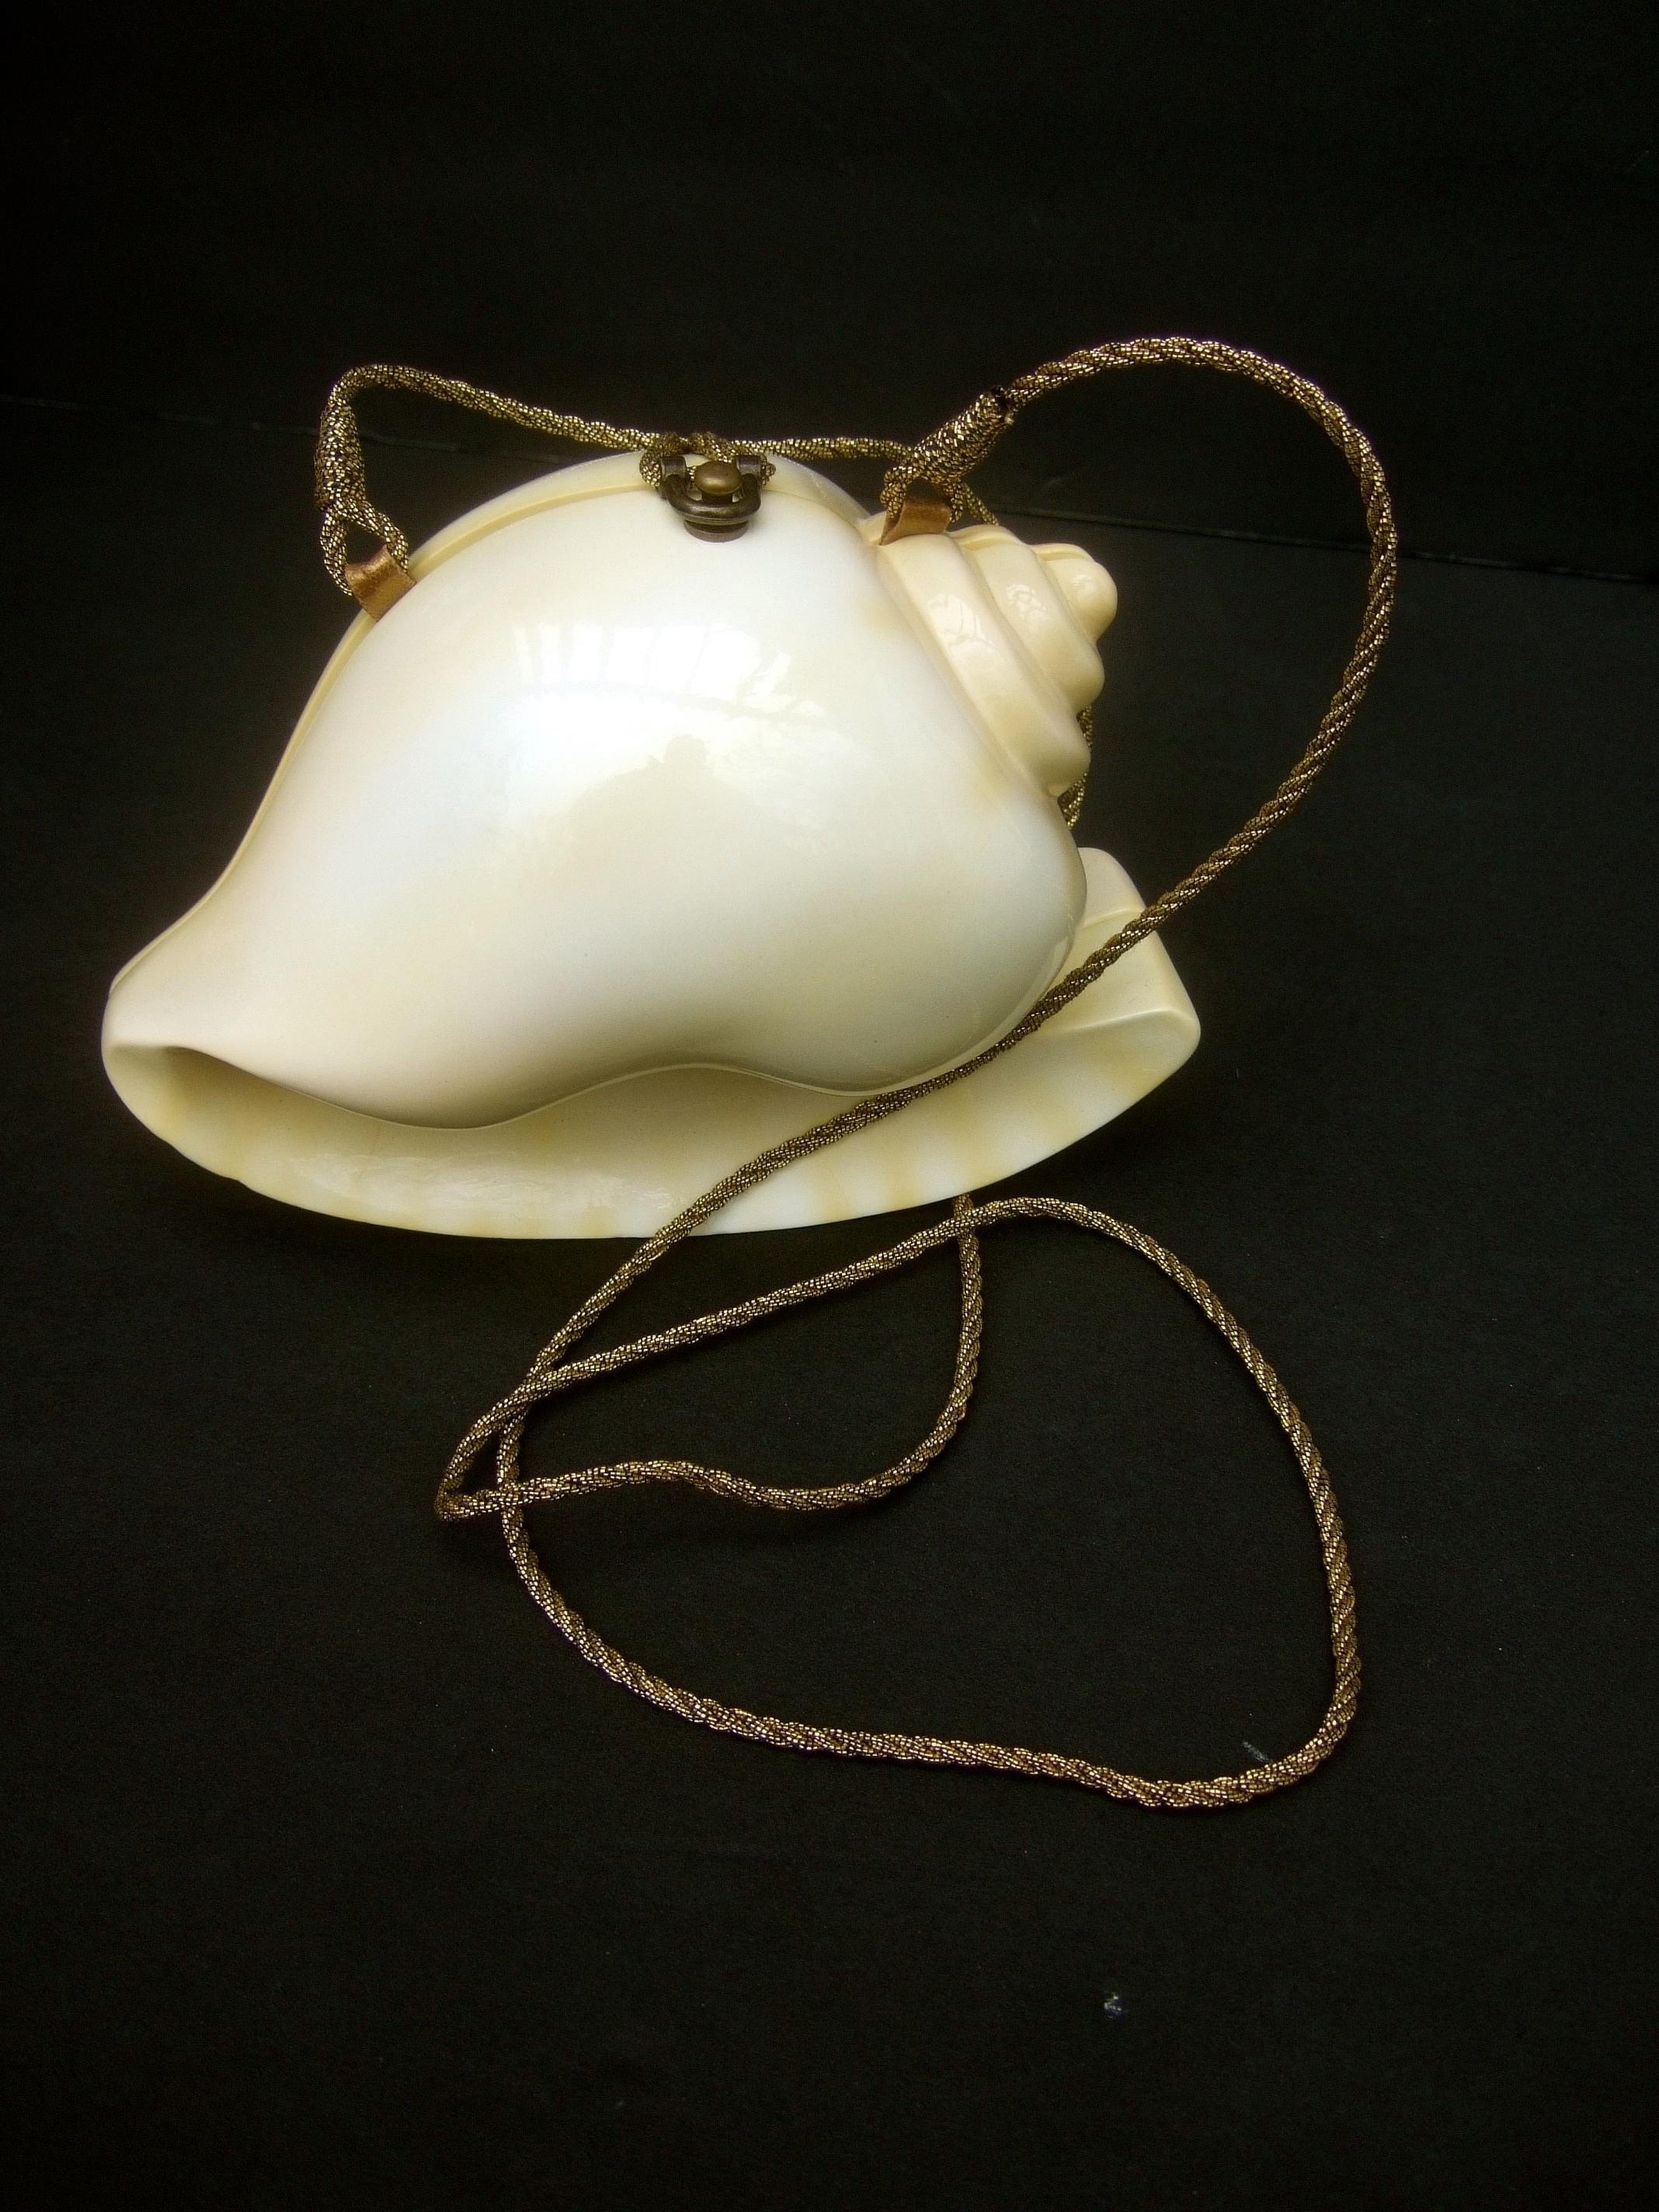 conch shell purse